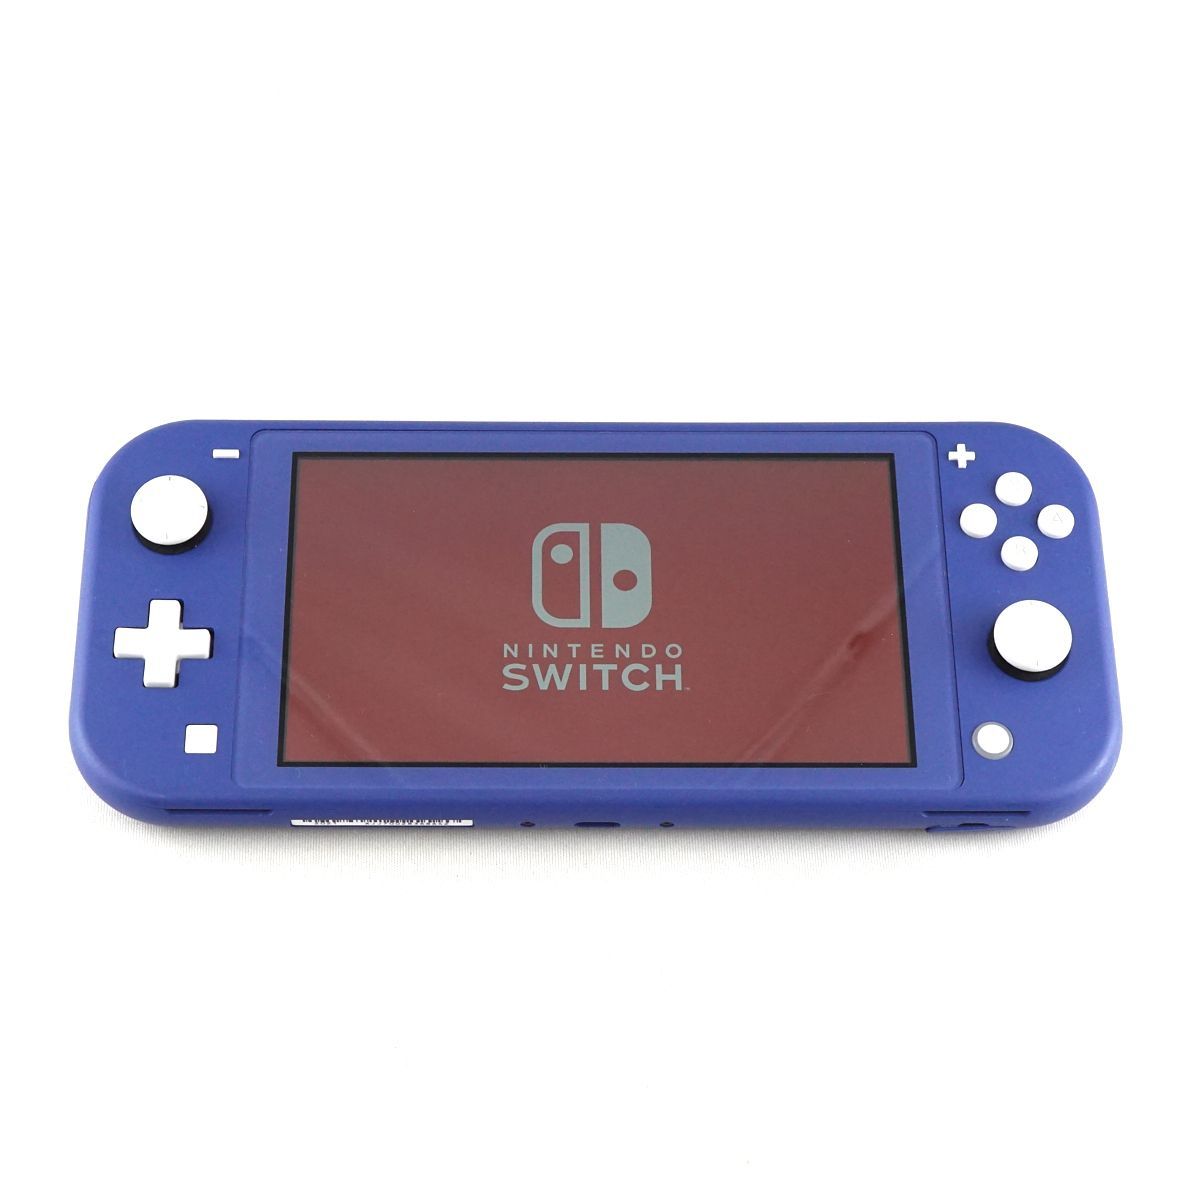 Nintendo Switch Lite 完品　即日発送